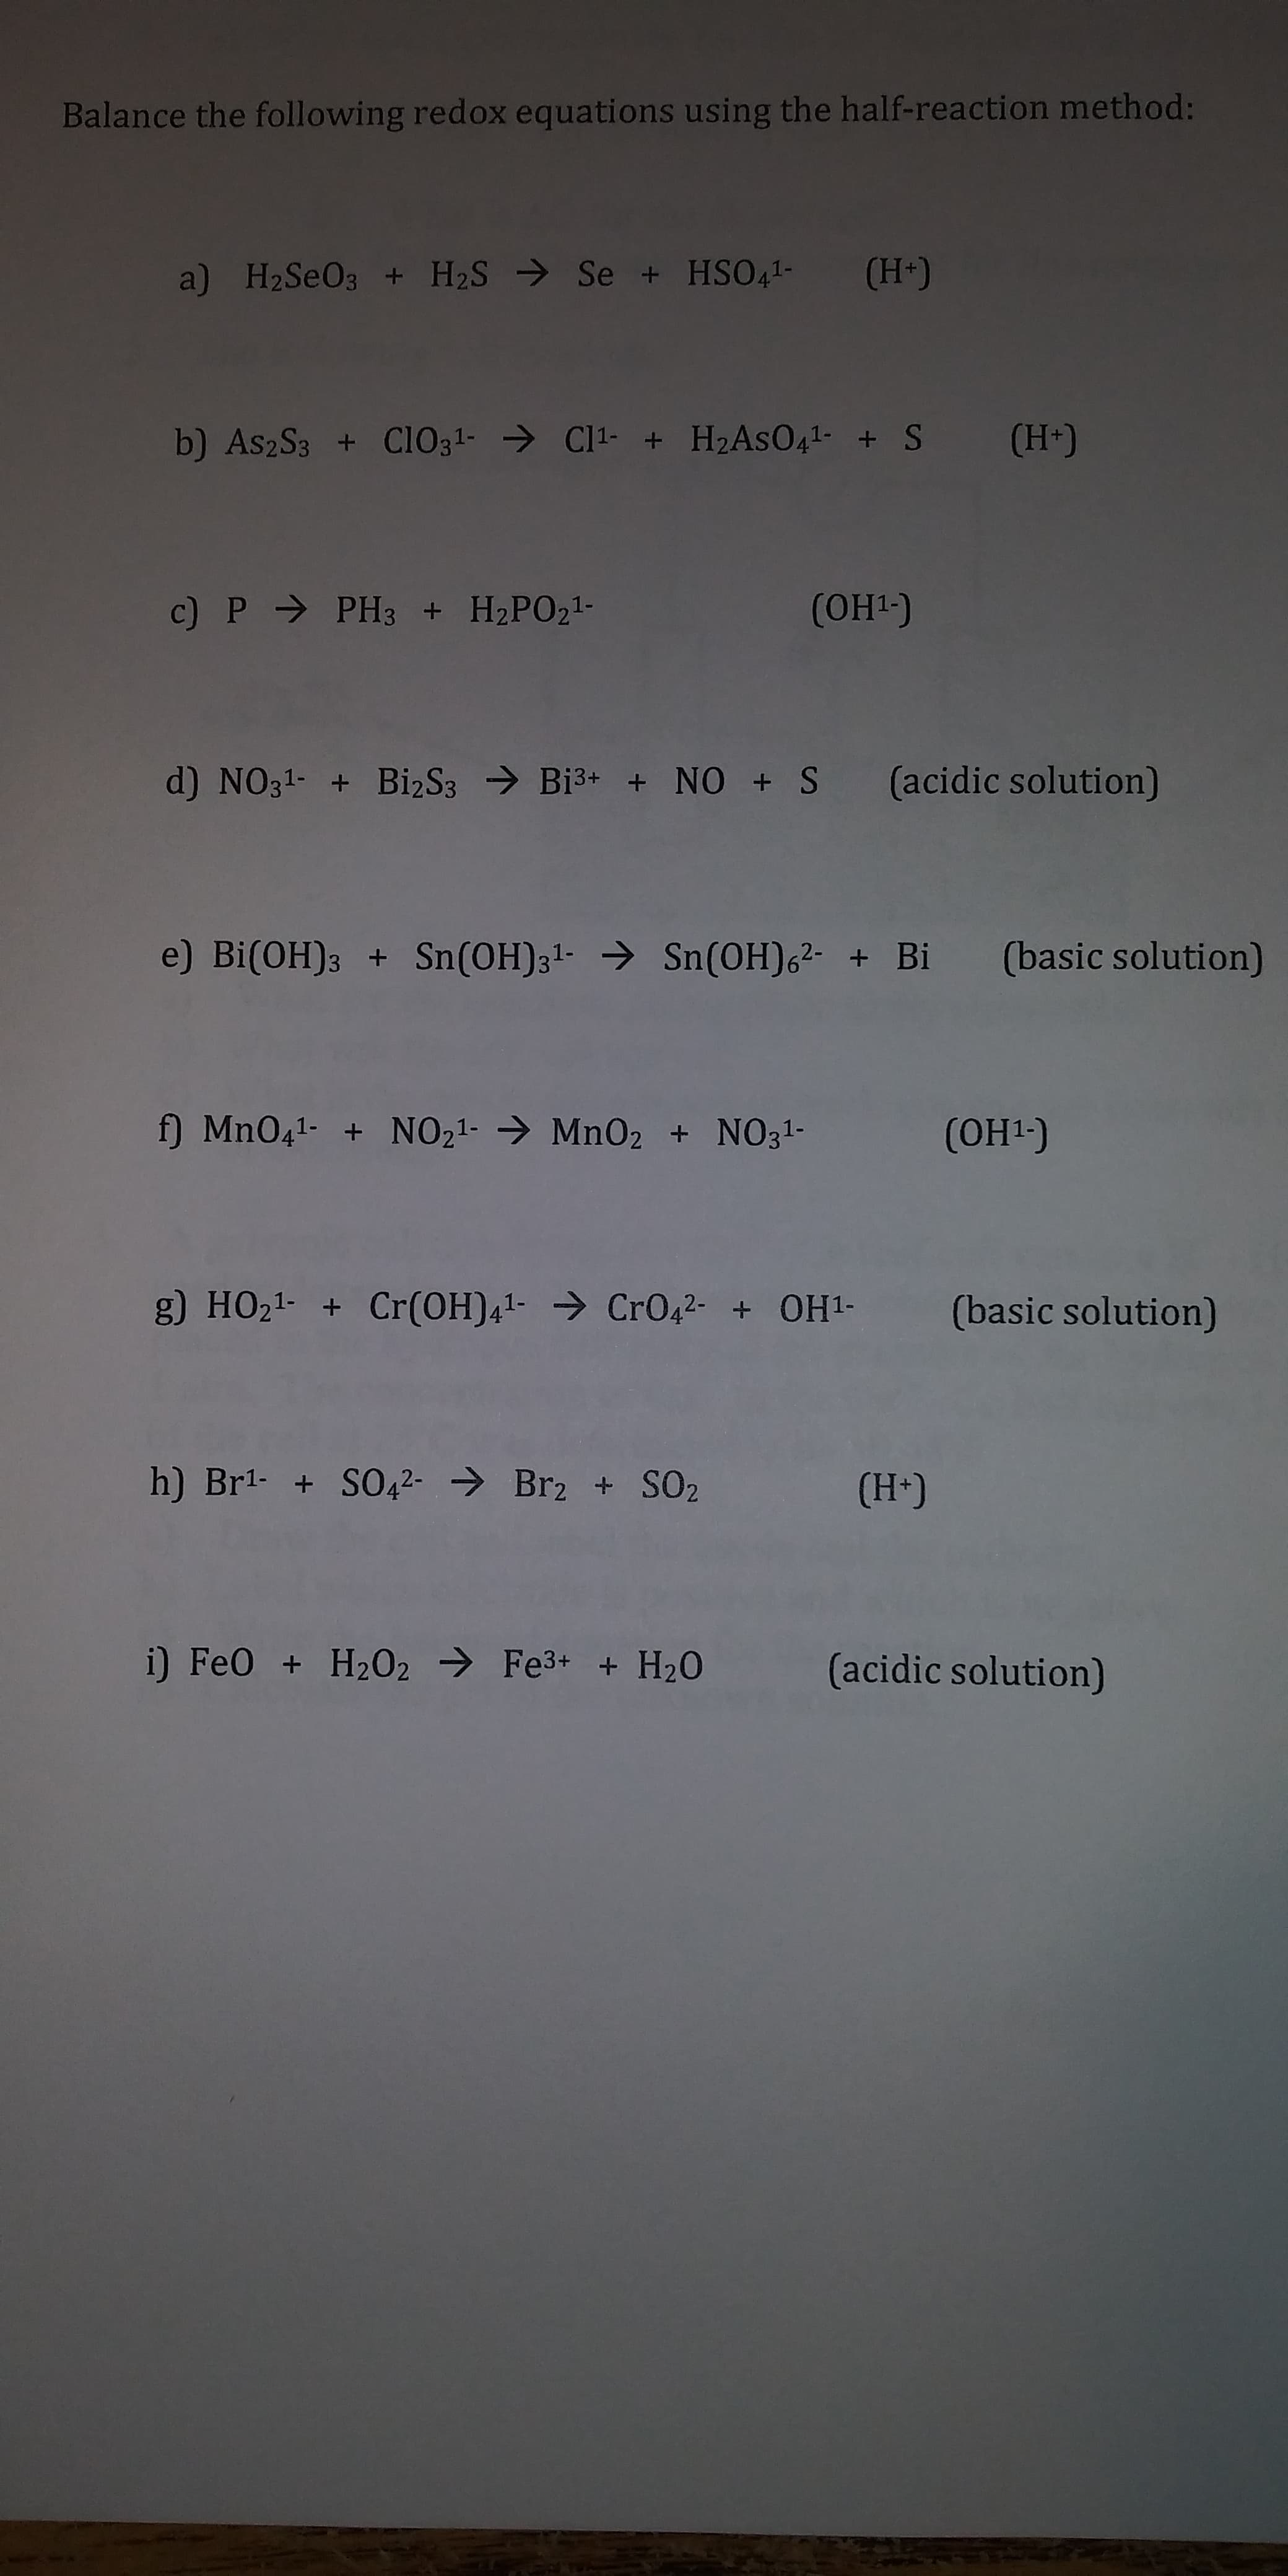 Balance the following redox equations using the half-reaction method:
+HPO(OH)
d) N031- + BizSs
Bi3+ + NO + S (acidic solution)
e) Bi(OH)3 + Sn (OH)31- Sn (OH)62
Bi (basic solution)
g) HO2+Cr(OH)Cro+ OH1 (basic solution)
+ SO2 (H)
i) Feo + H202
Fe3 H20
(acidic solution)
